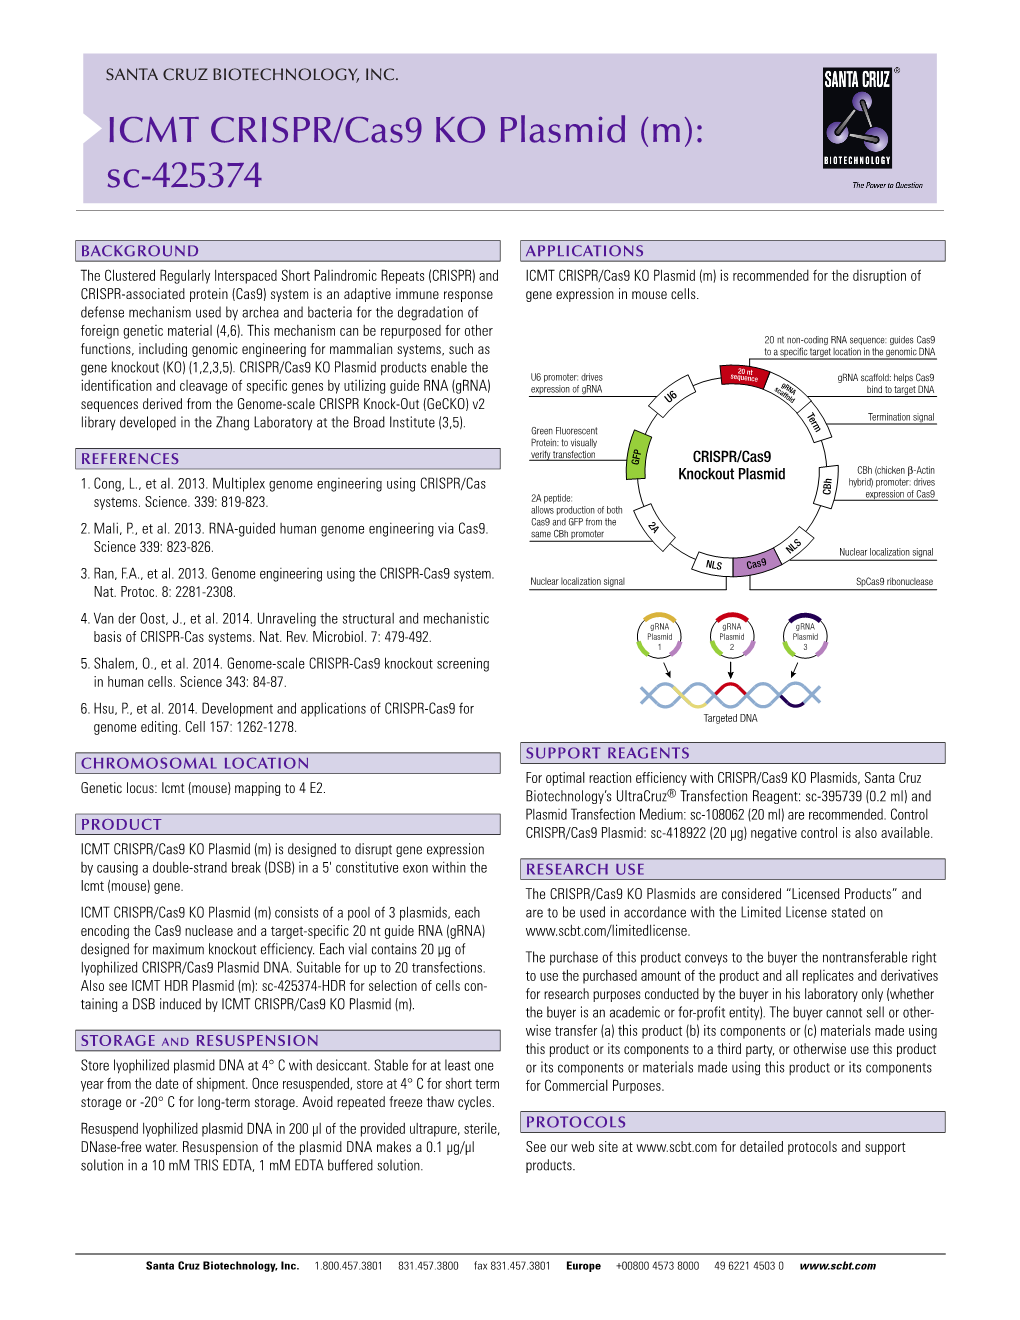 ICMT CRISPR/Cas9 KO Plasmid (M): Sc-425374